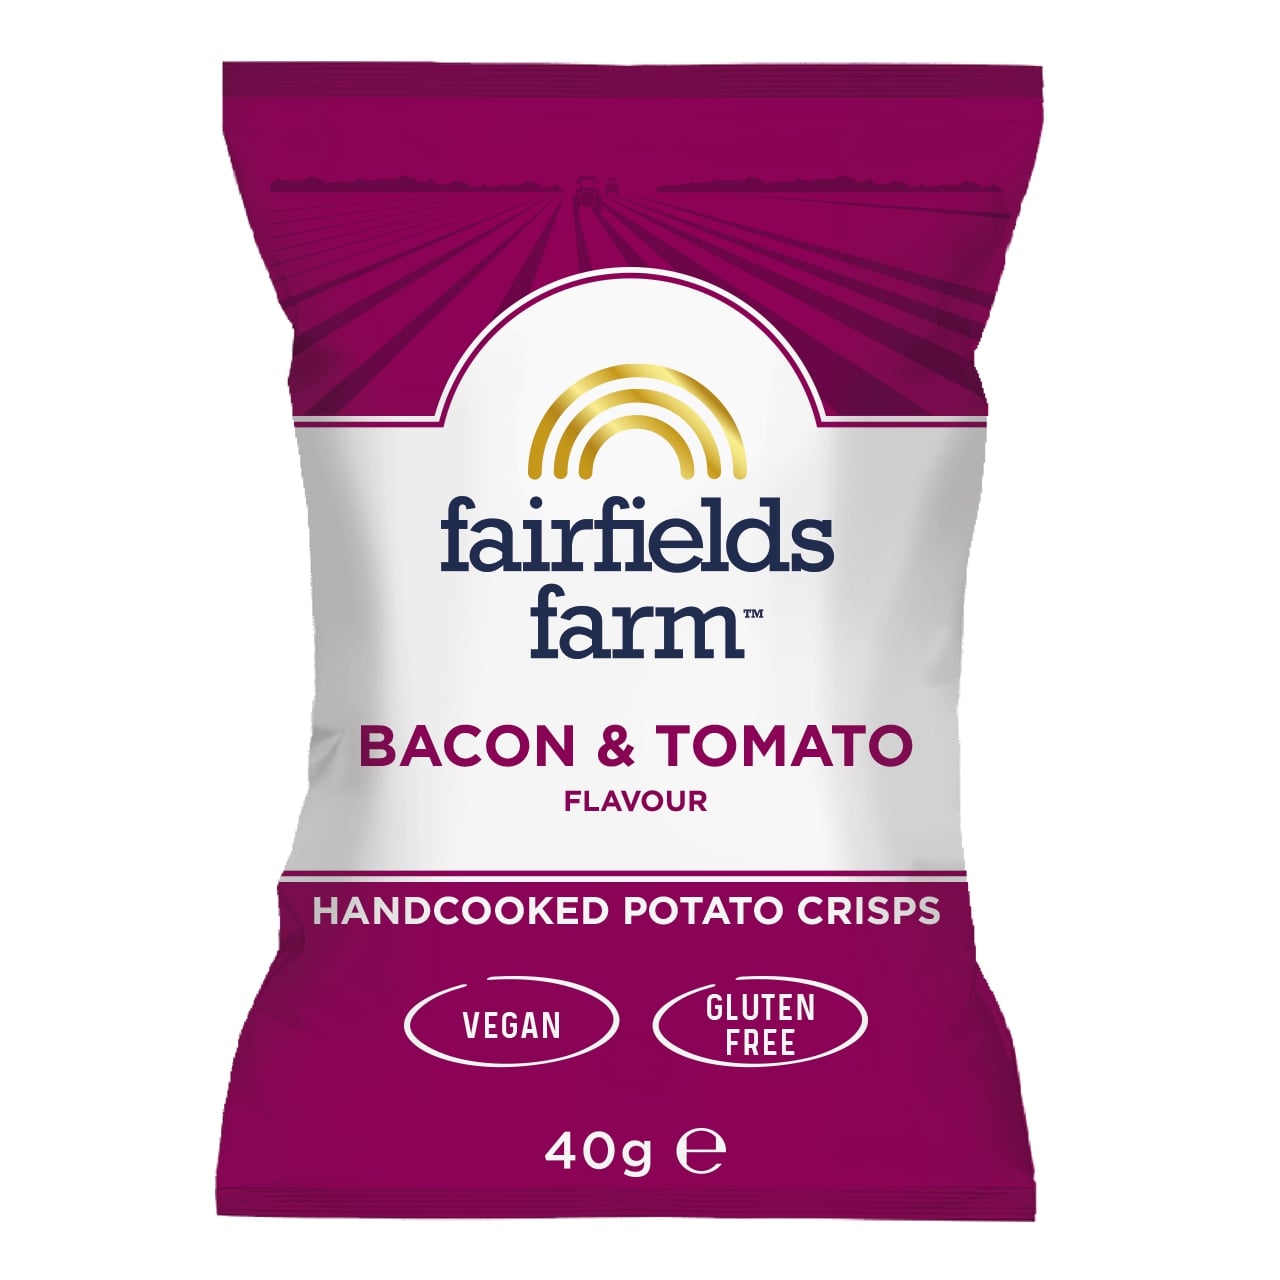 Bacon & Tomato Flavour – 36 x 40g bags